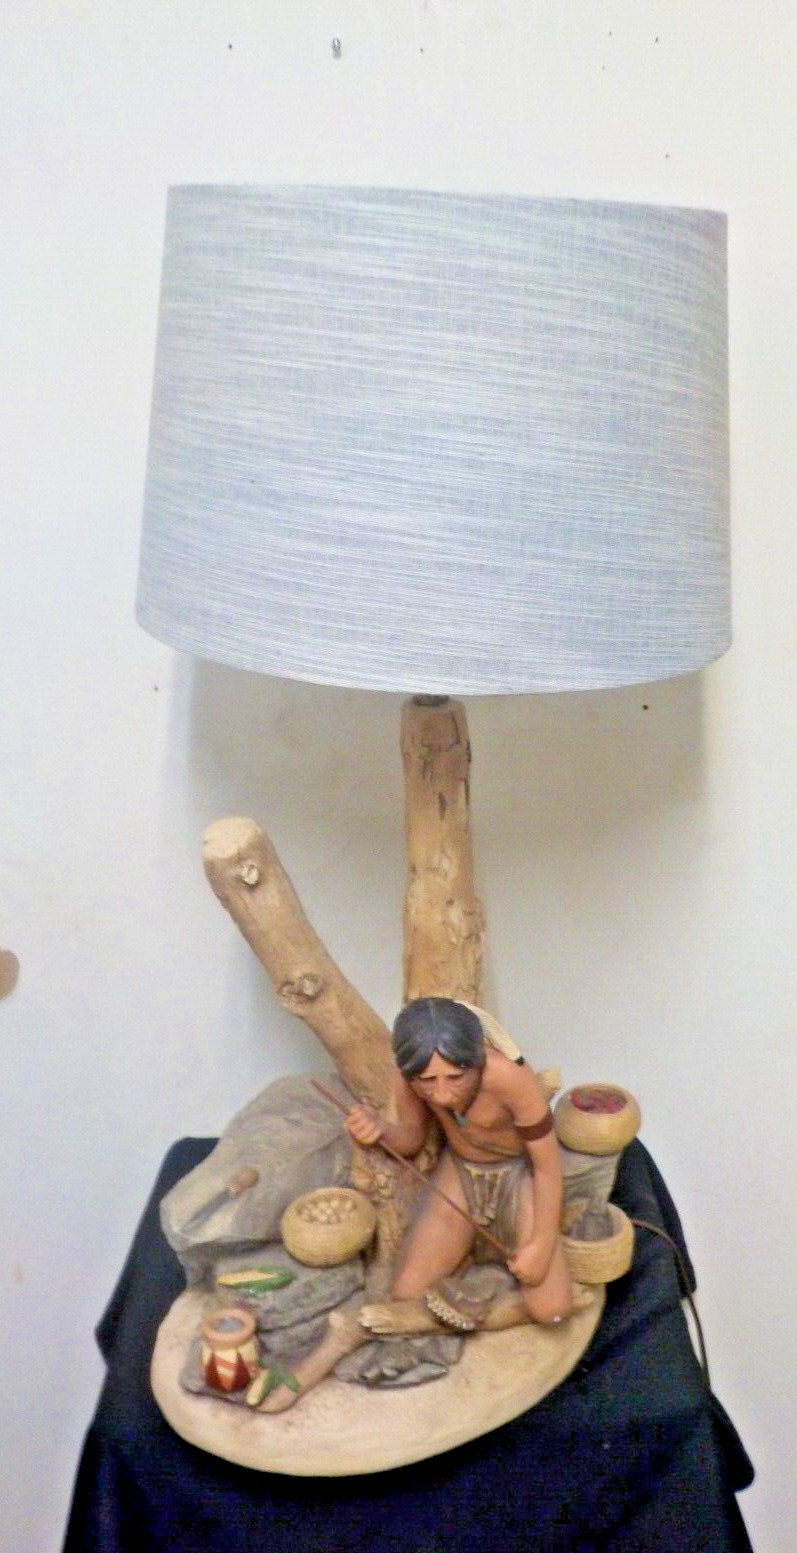 Vintage Florentine Art Studio Inc Native Man Harvest Bowls Lamp